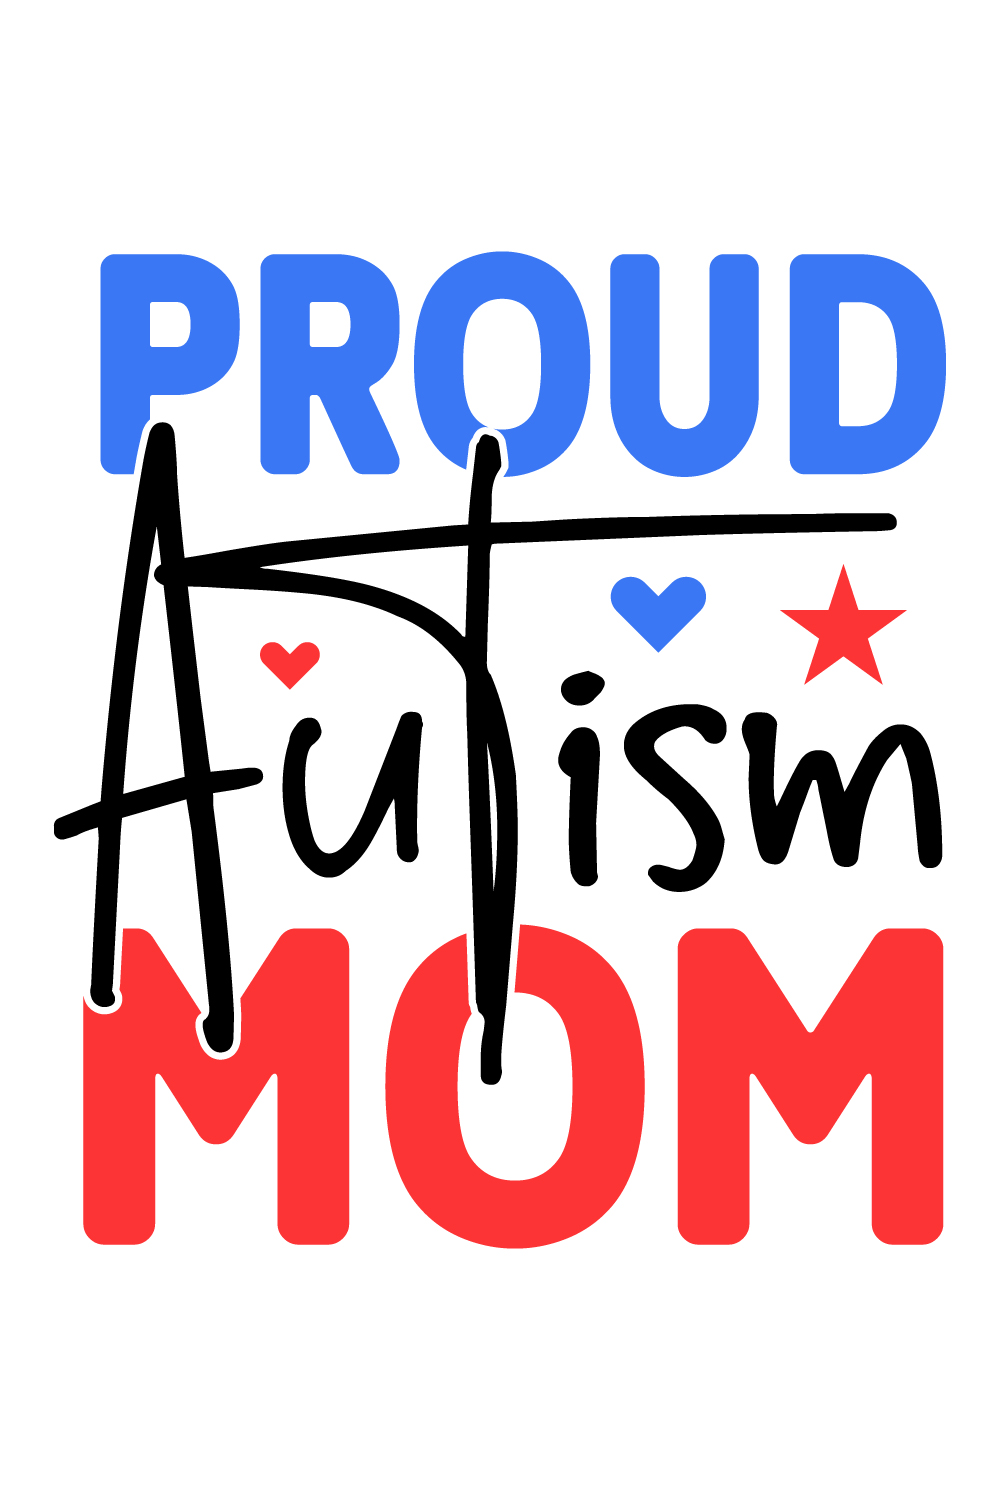 Proud Autism Mom pinterest preview image.